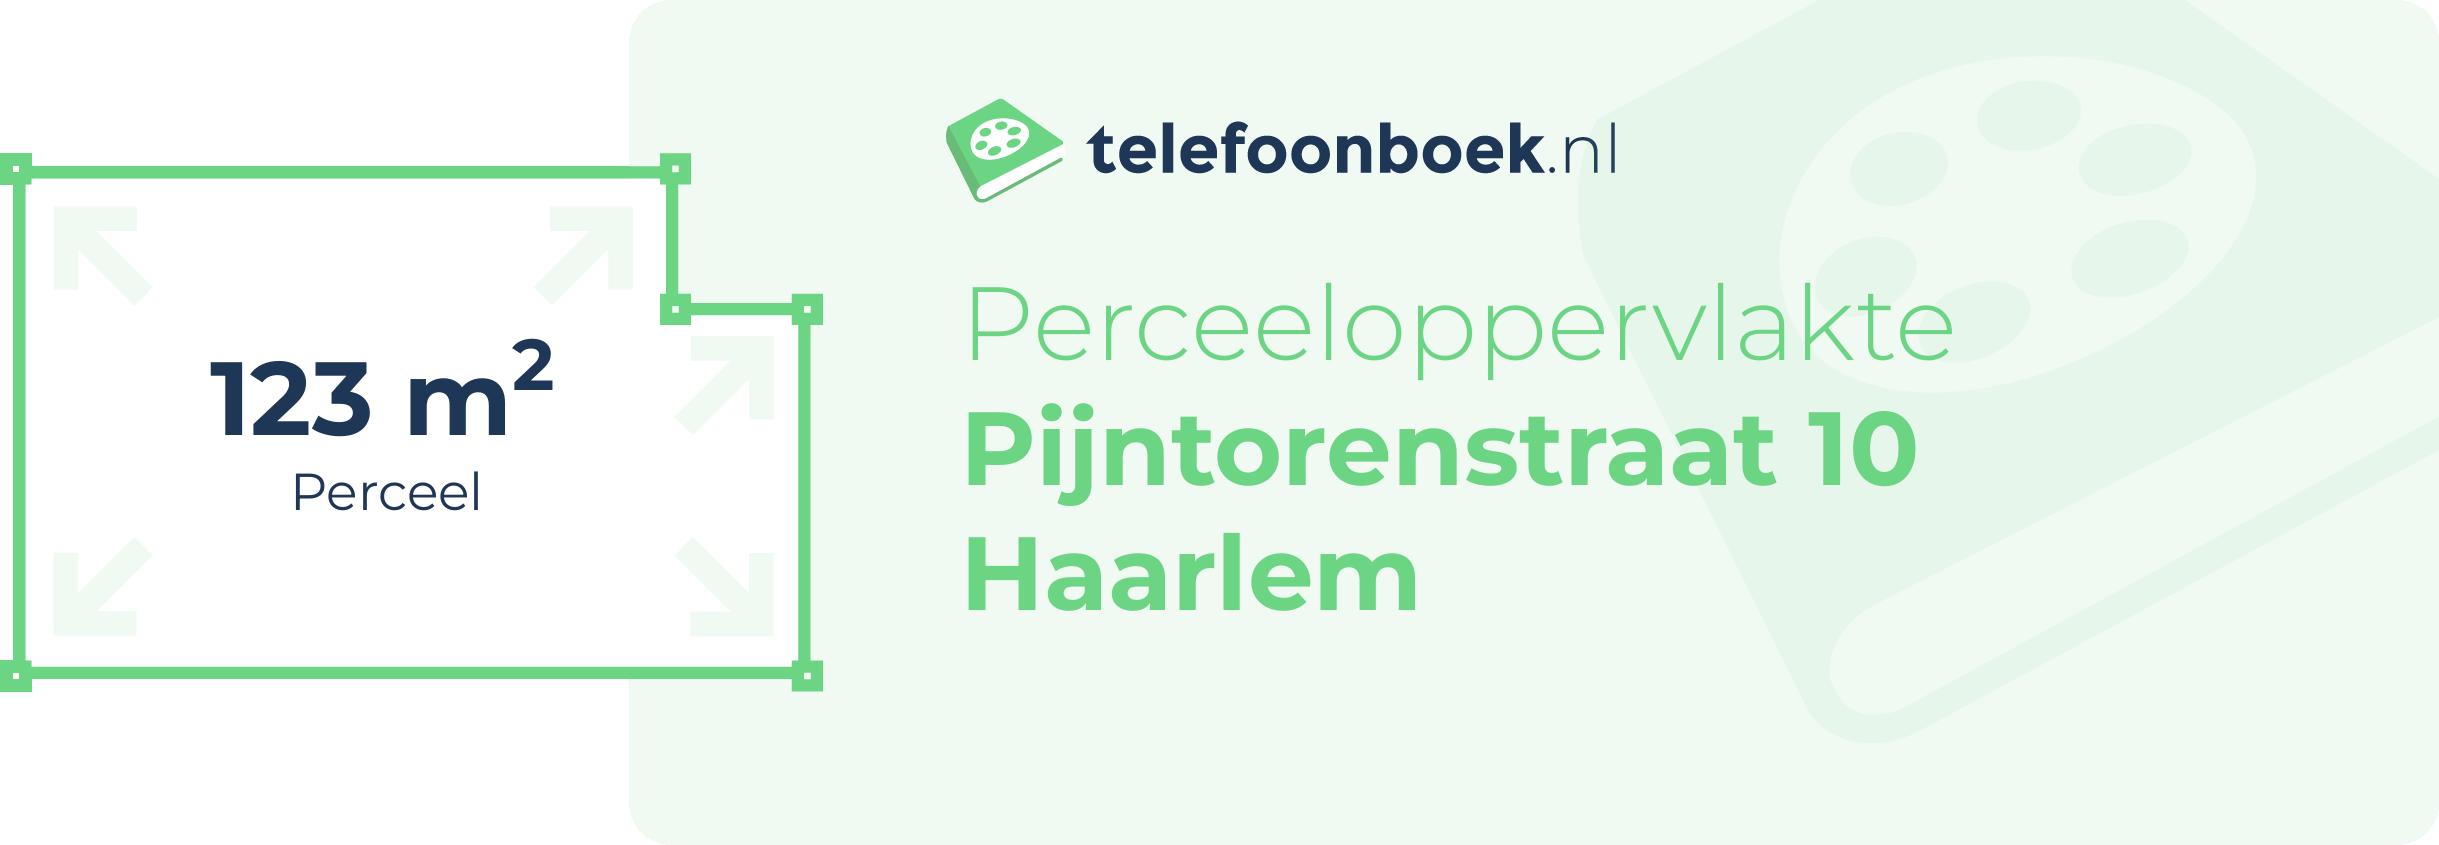 Perceeloppervlakte Pijntorenstraat 10 Haarlem